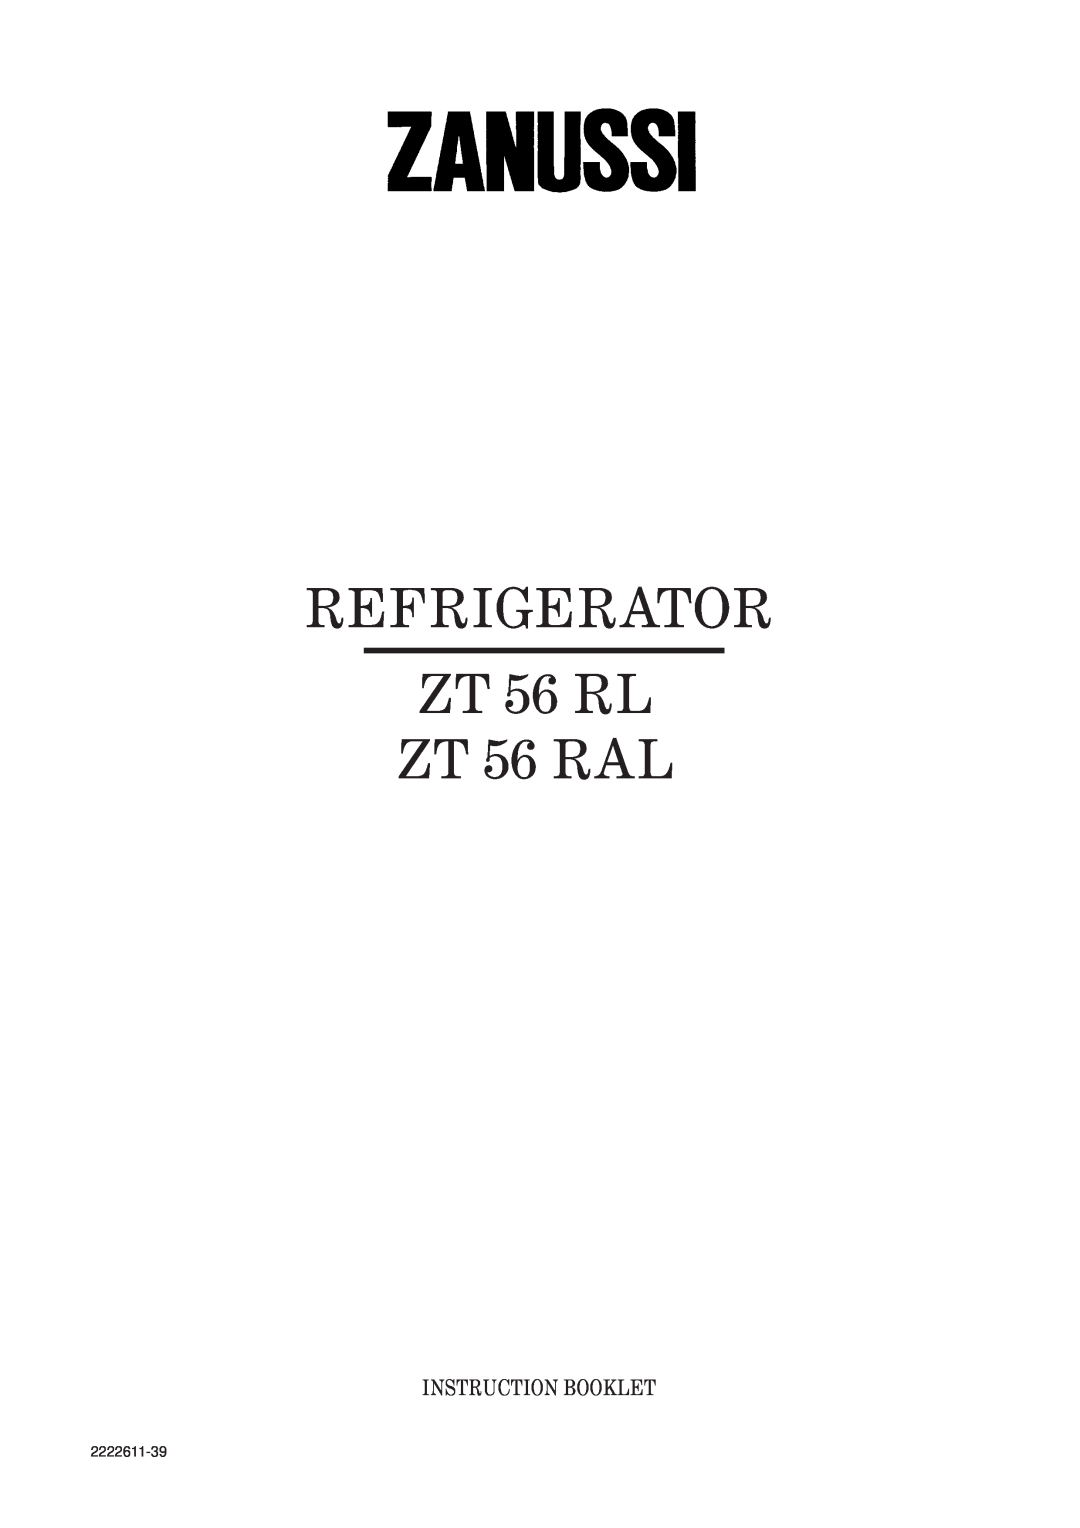 Zanussi manual Refrigerator, ZT 56 RL ZT 56 RAL, Instruction Booklet, 2222611-39 